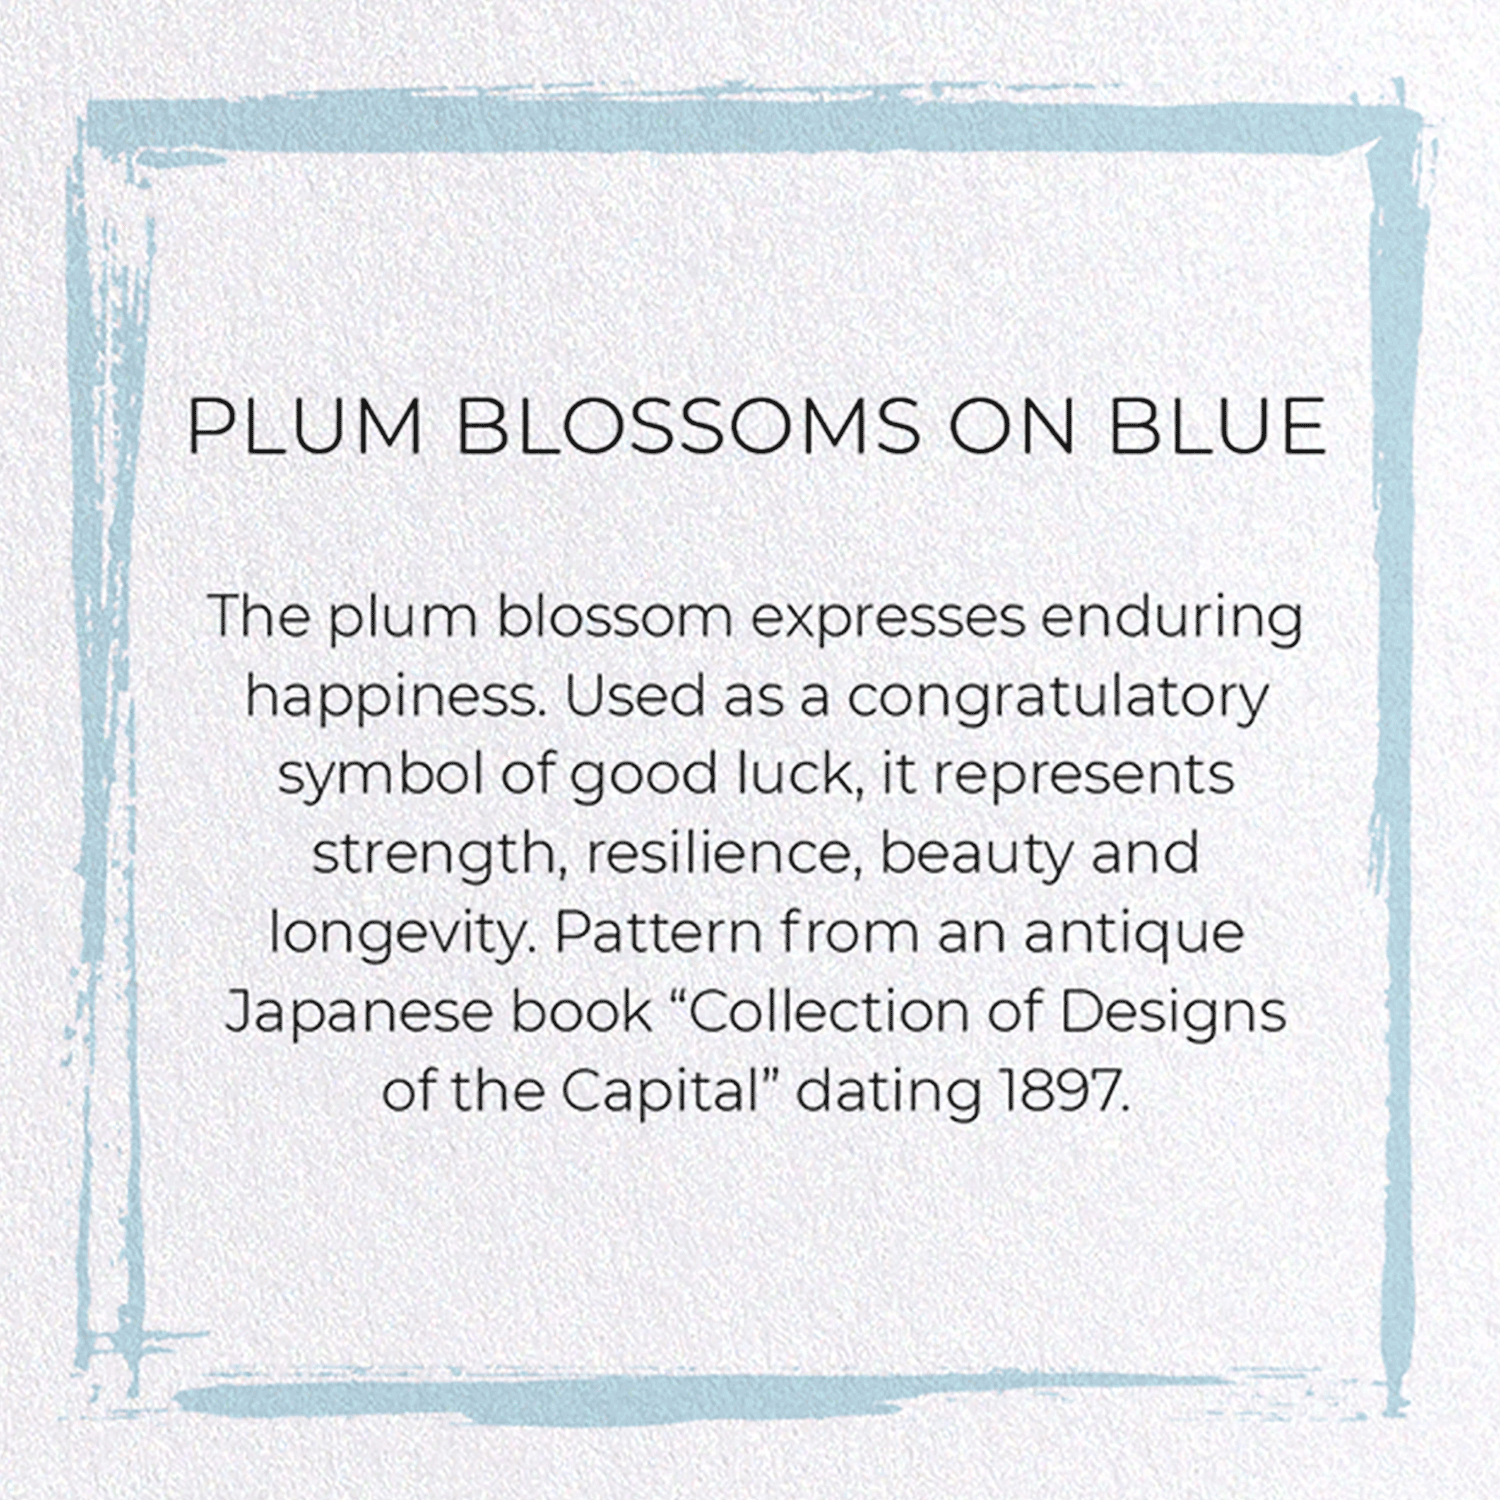 PLUM BLOSSOMS ON BLUE